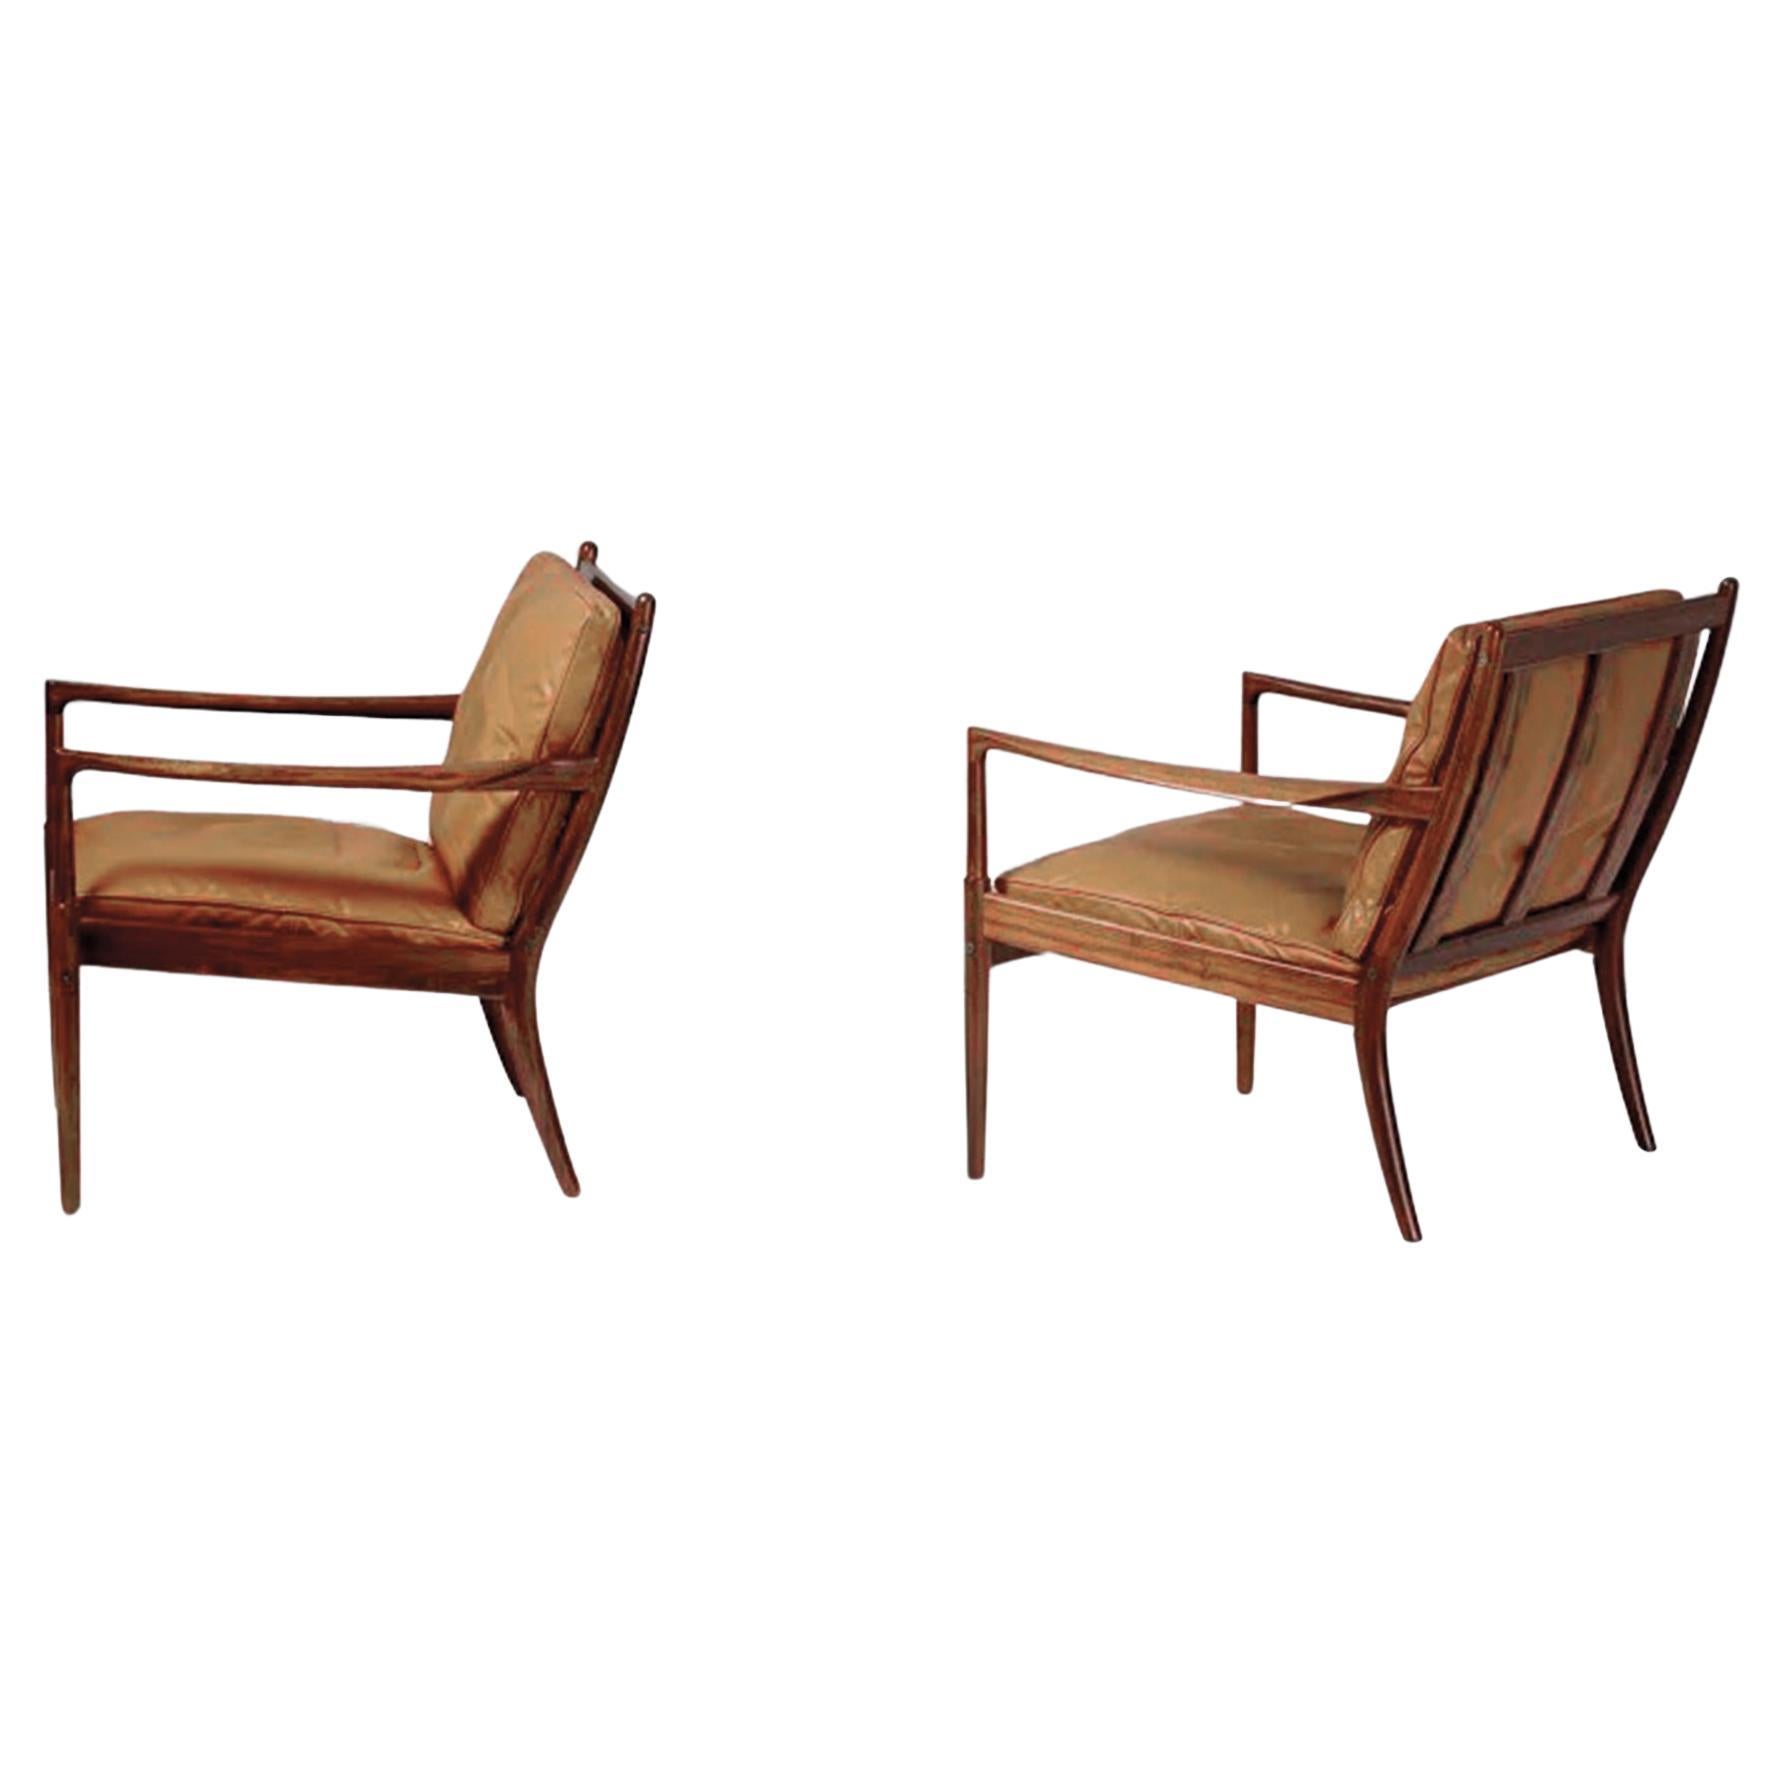 Pair of "Samsö" lounge chairs by Ib Kofod-Larsen from 1960